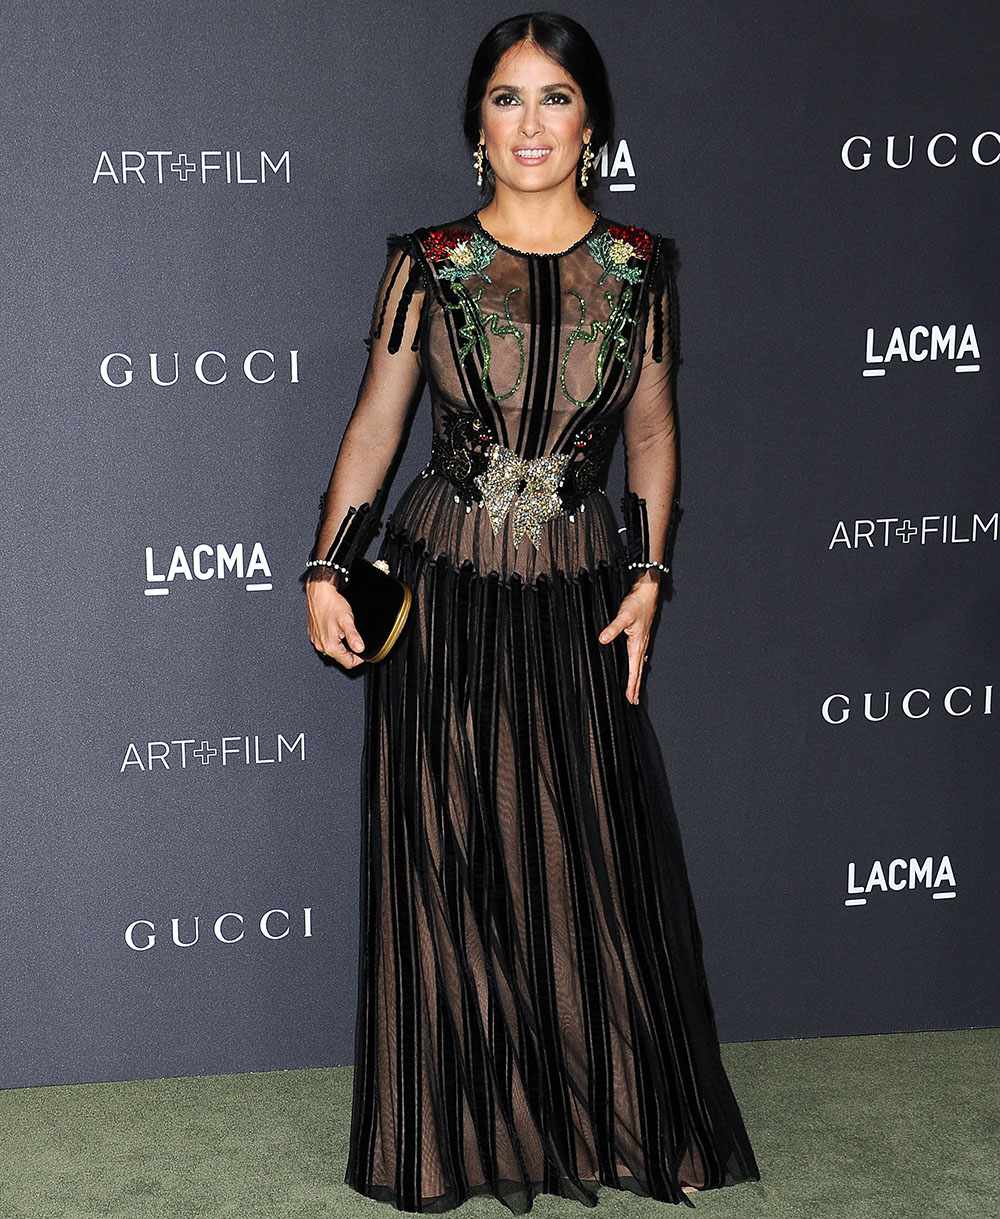 LOS ANGELES, CA - OCTOBER 29:  Actress Salma Hayek attends the 2016 LACMA Art + Film gala at LACMA on October 29, 2016 in Los Angeles, California.  (Photo by Jason LaVeris/FilmMagic)